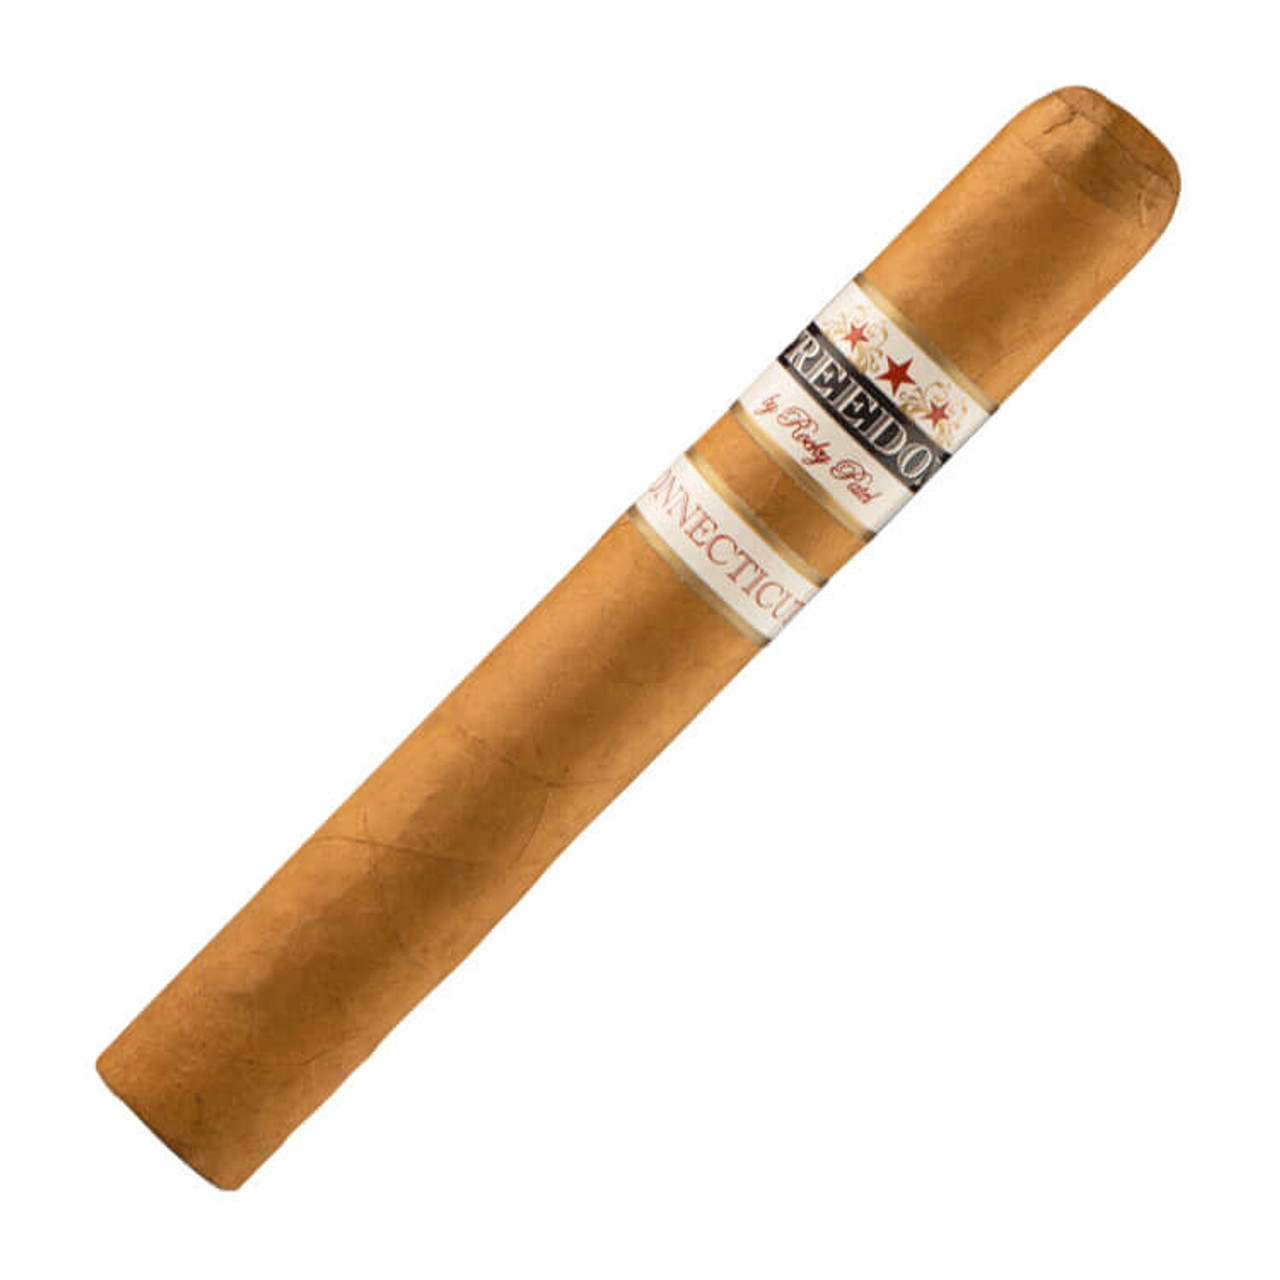 Rocky Patel Freedom Connecticut Robusto Cigars - 5.5 x 50 (Box of 20)